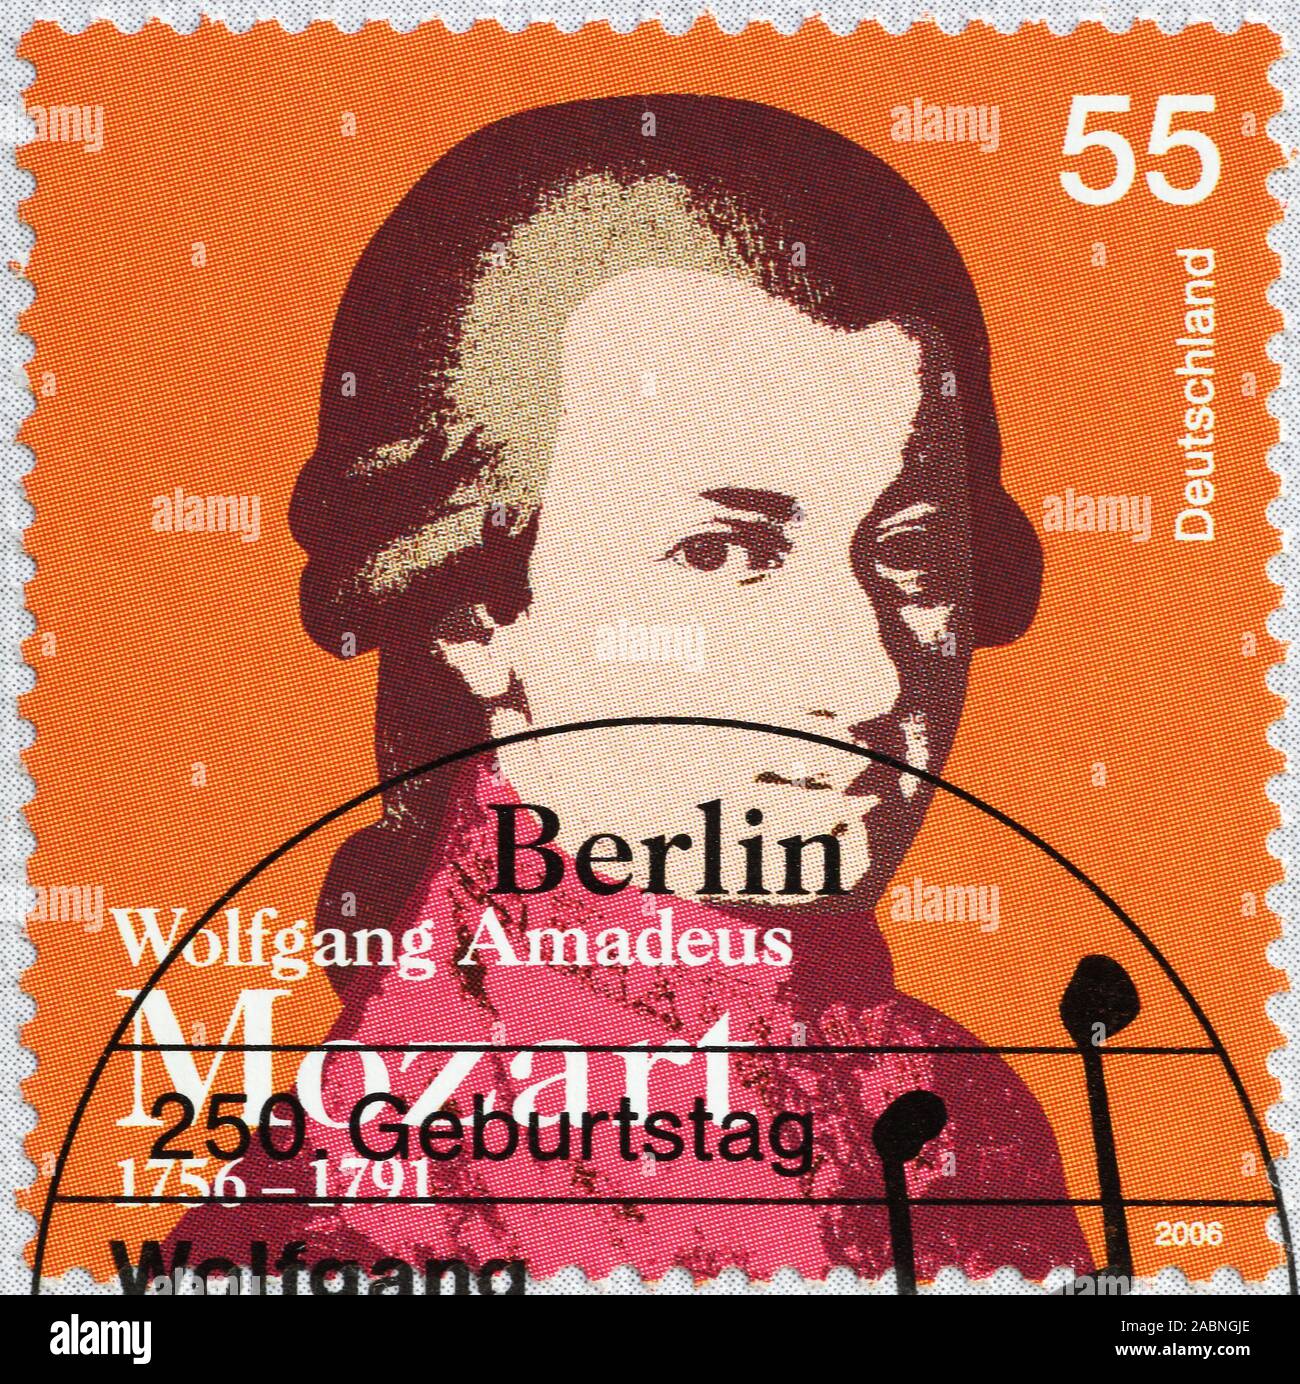 Portrait of Mozart on german postage stamp Stock Photo